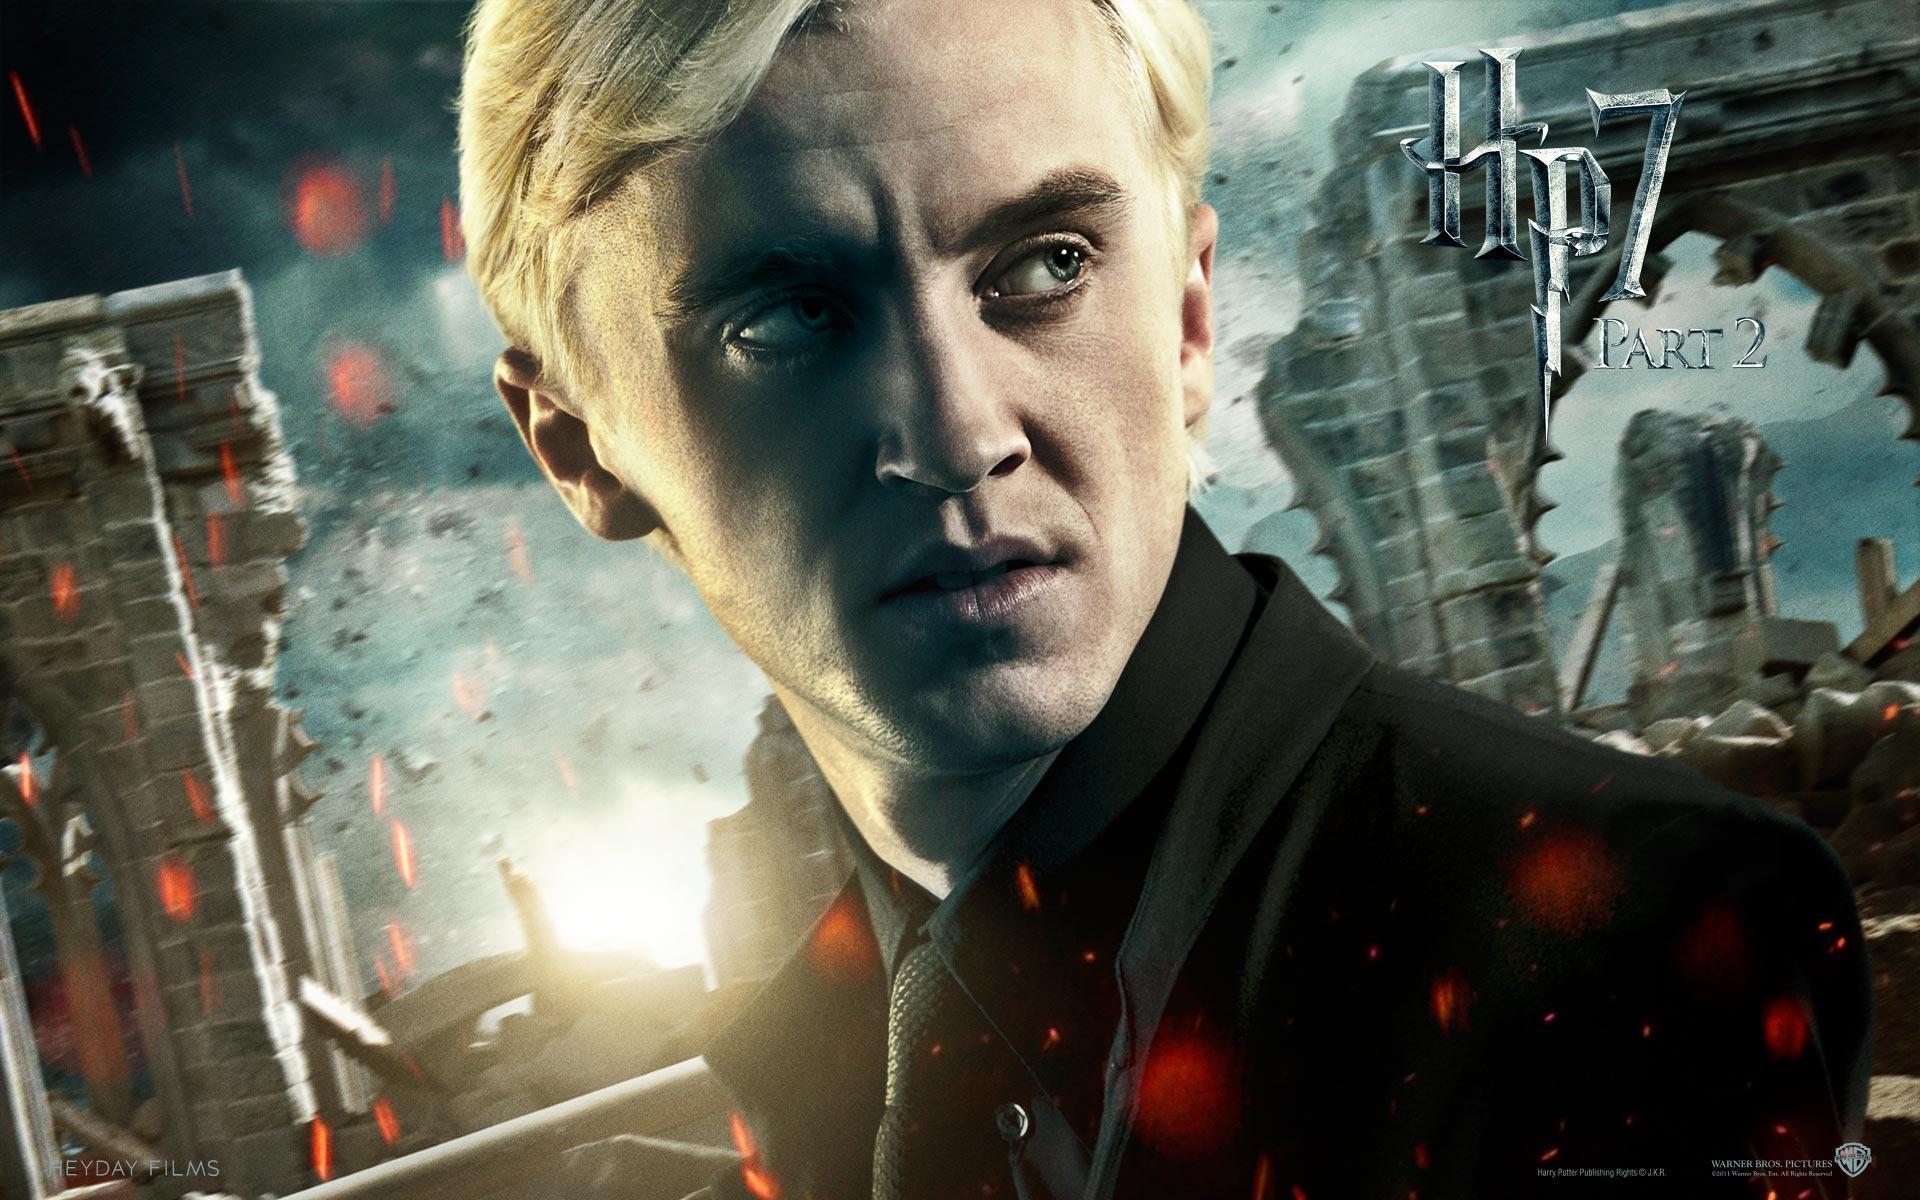 Stunning Draco Malfoy Background